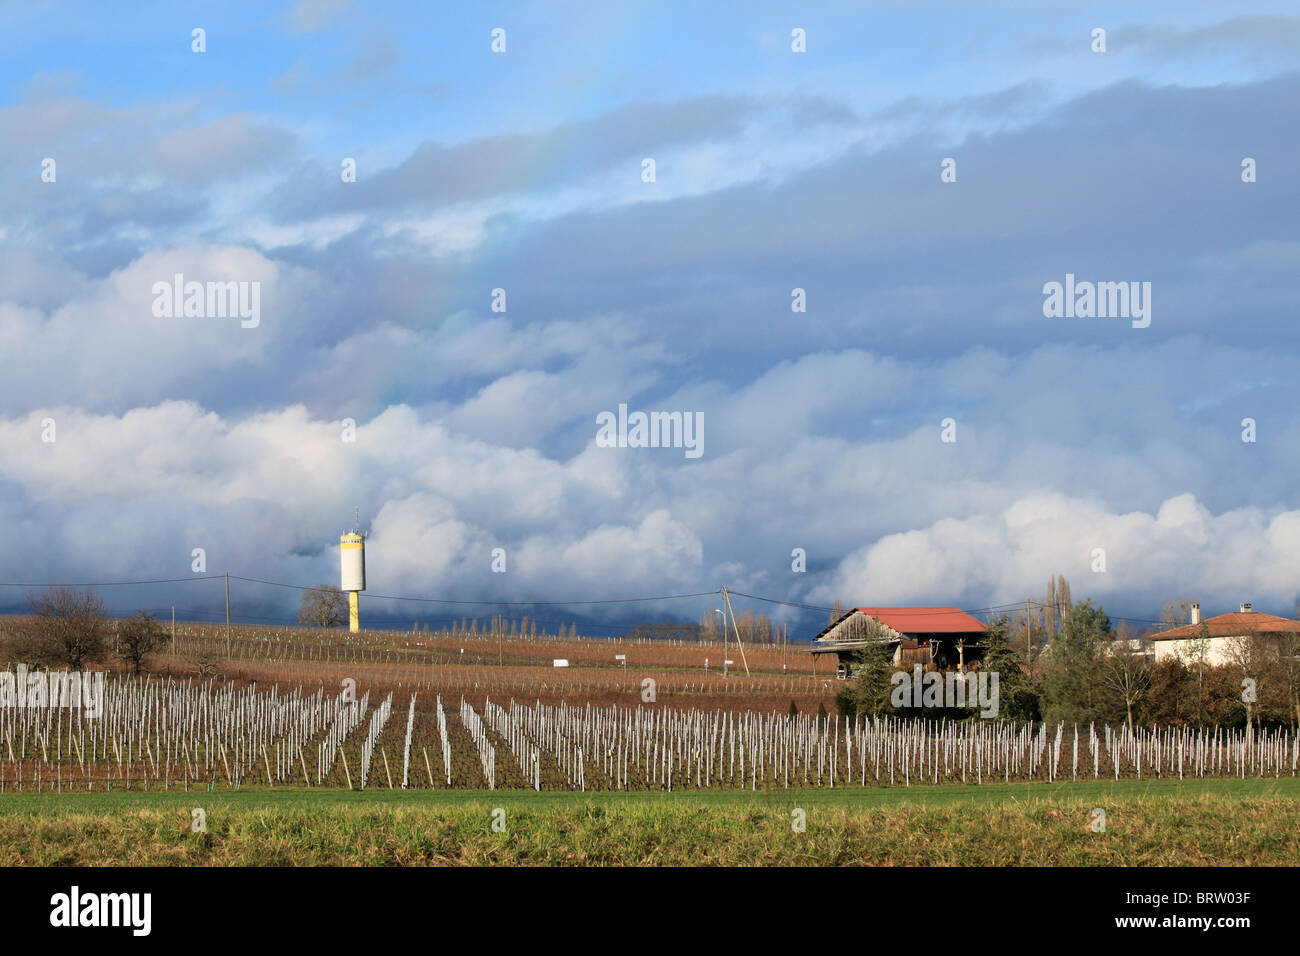 vineyard, Geneva region, cumulus stratus cloud behind, bad weather coming Stock Photo